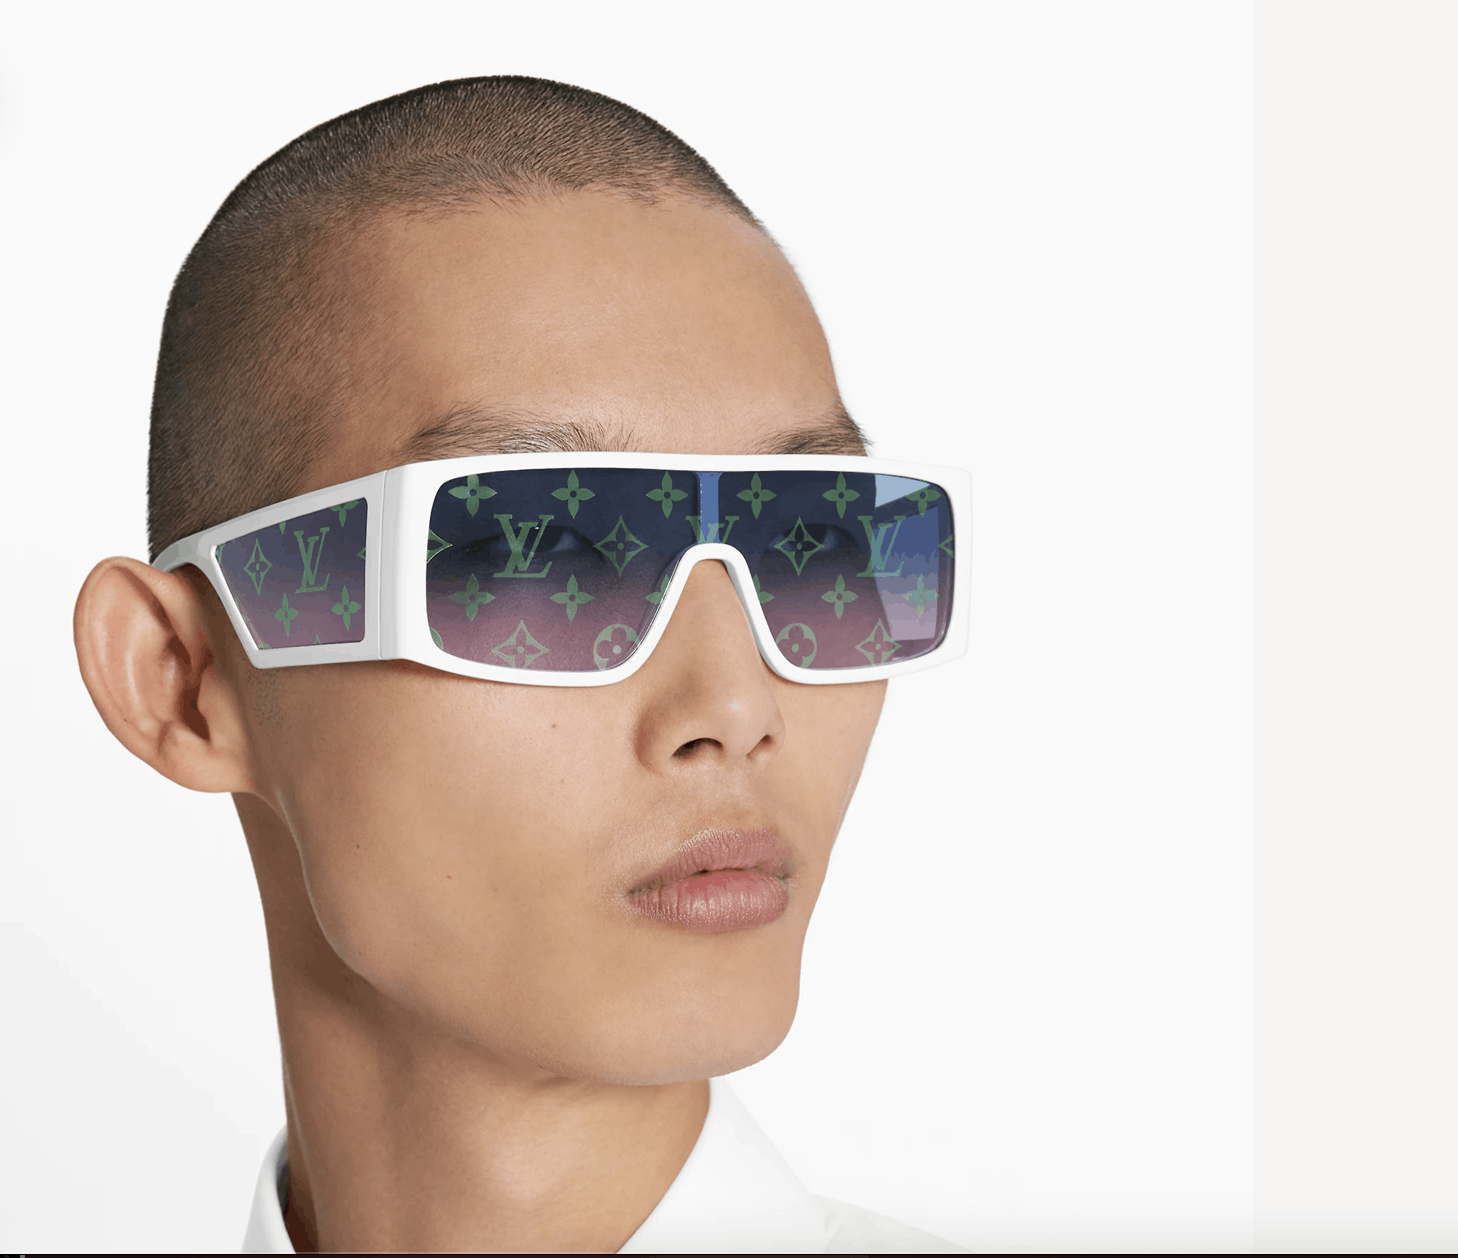 Louis Vuitton 2021 Monogram Sideway Sunglasses - White Sunglasses